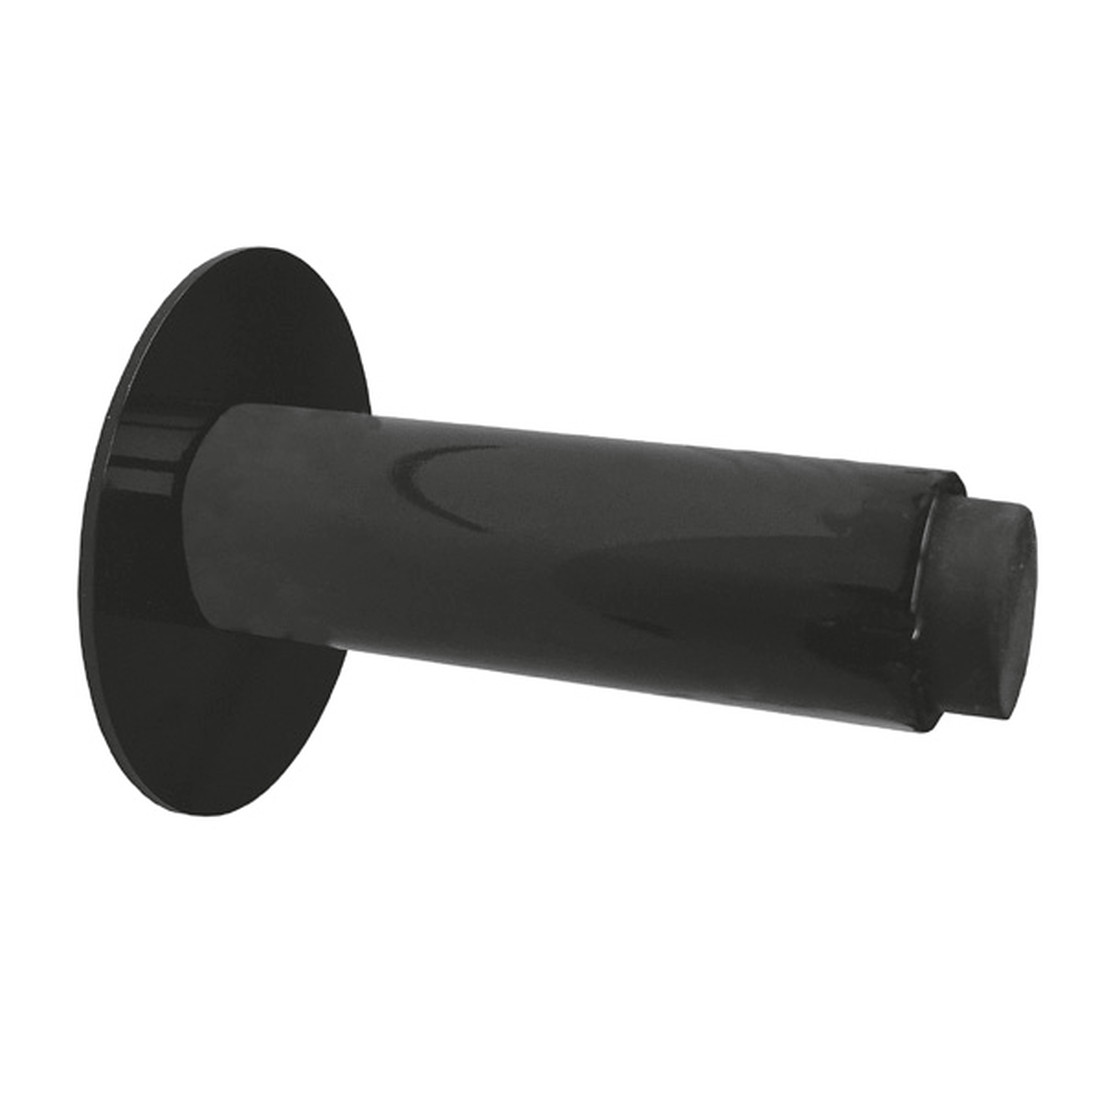 Türstopper D 18mm schwarz Wandmontage